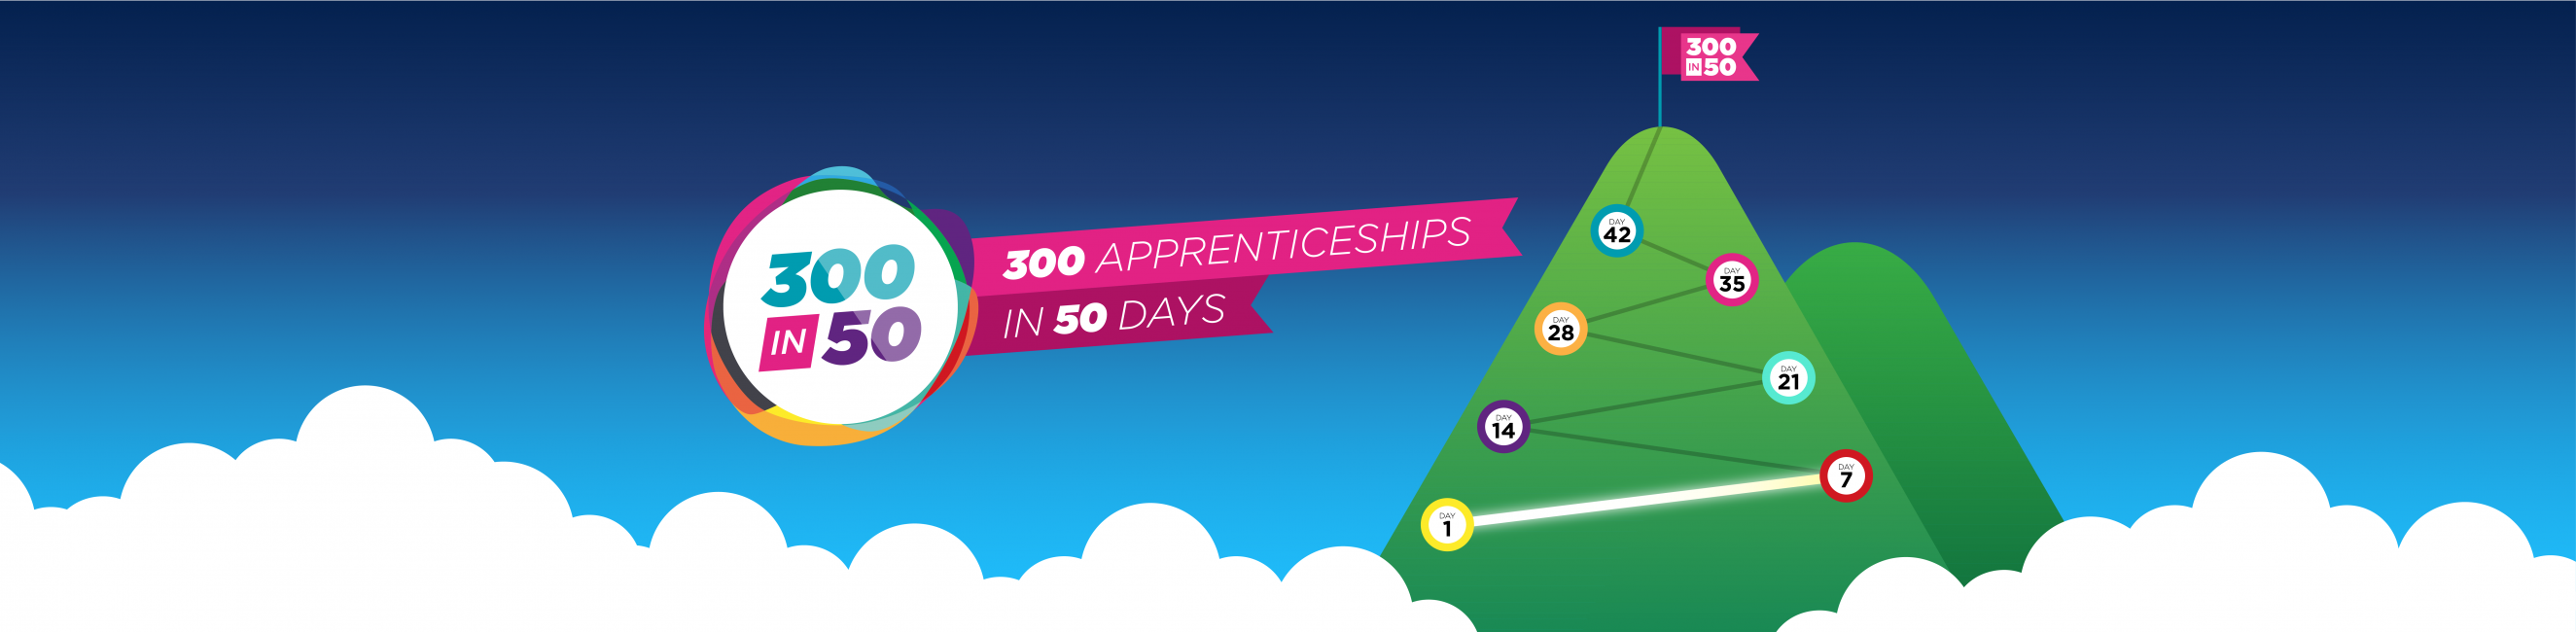 300 apprenticeship enrolments in 50 days